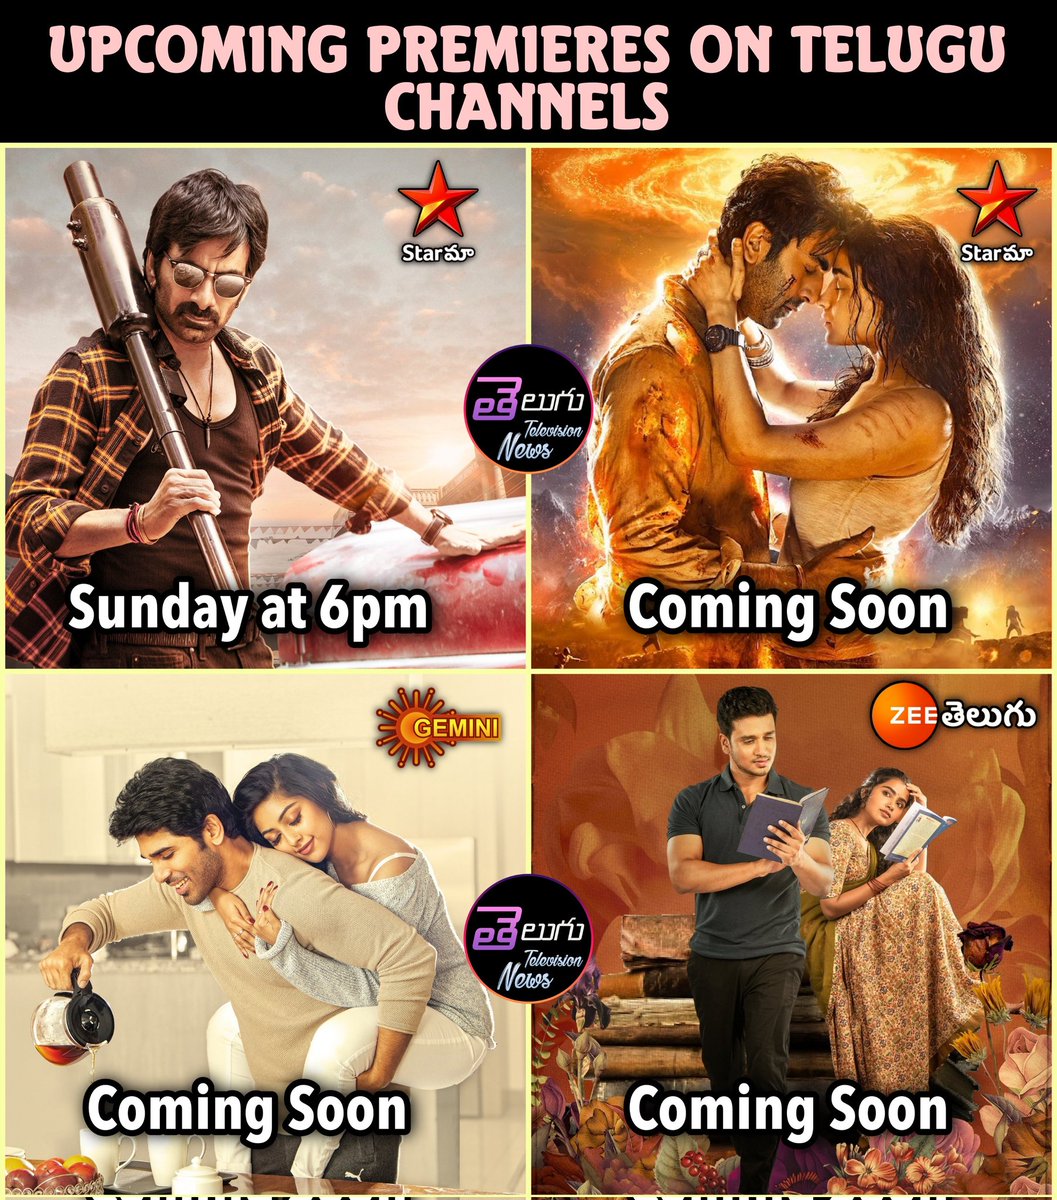 Upcoming Premieres On Telugu Channels

#StarMaa 
#Dhamaka - Sunday at 6pm
#Brahmastra - Coming Soon

#GeminiTV
#UrvasivoRakshasivo - Coming Soon

#ZeeTelugu
#18Pages - Coming Soon 

#Raviteja #RanbirKapoor #AlluSirish #Nikhil